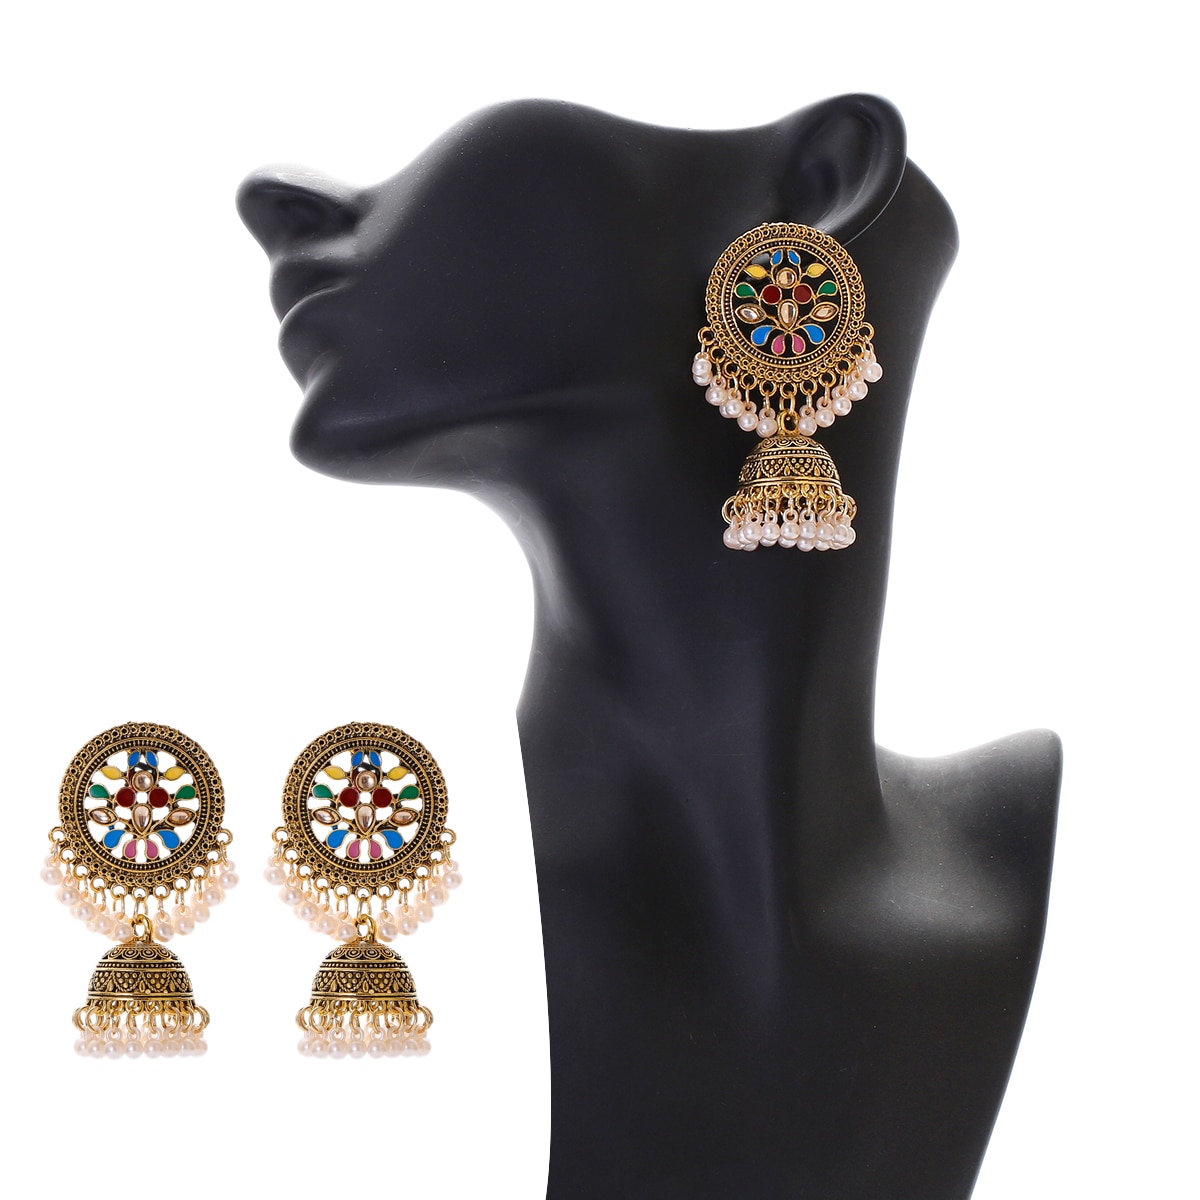 Classic-Round-Flower-India-EarringRing-Set-Women39s-Wedding-Jewelry-Hangers-Pearl-Beads-Jhumka-Earri-3256804205740657-7